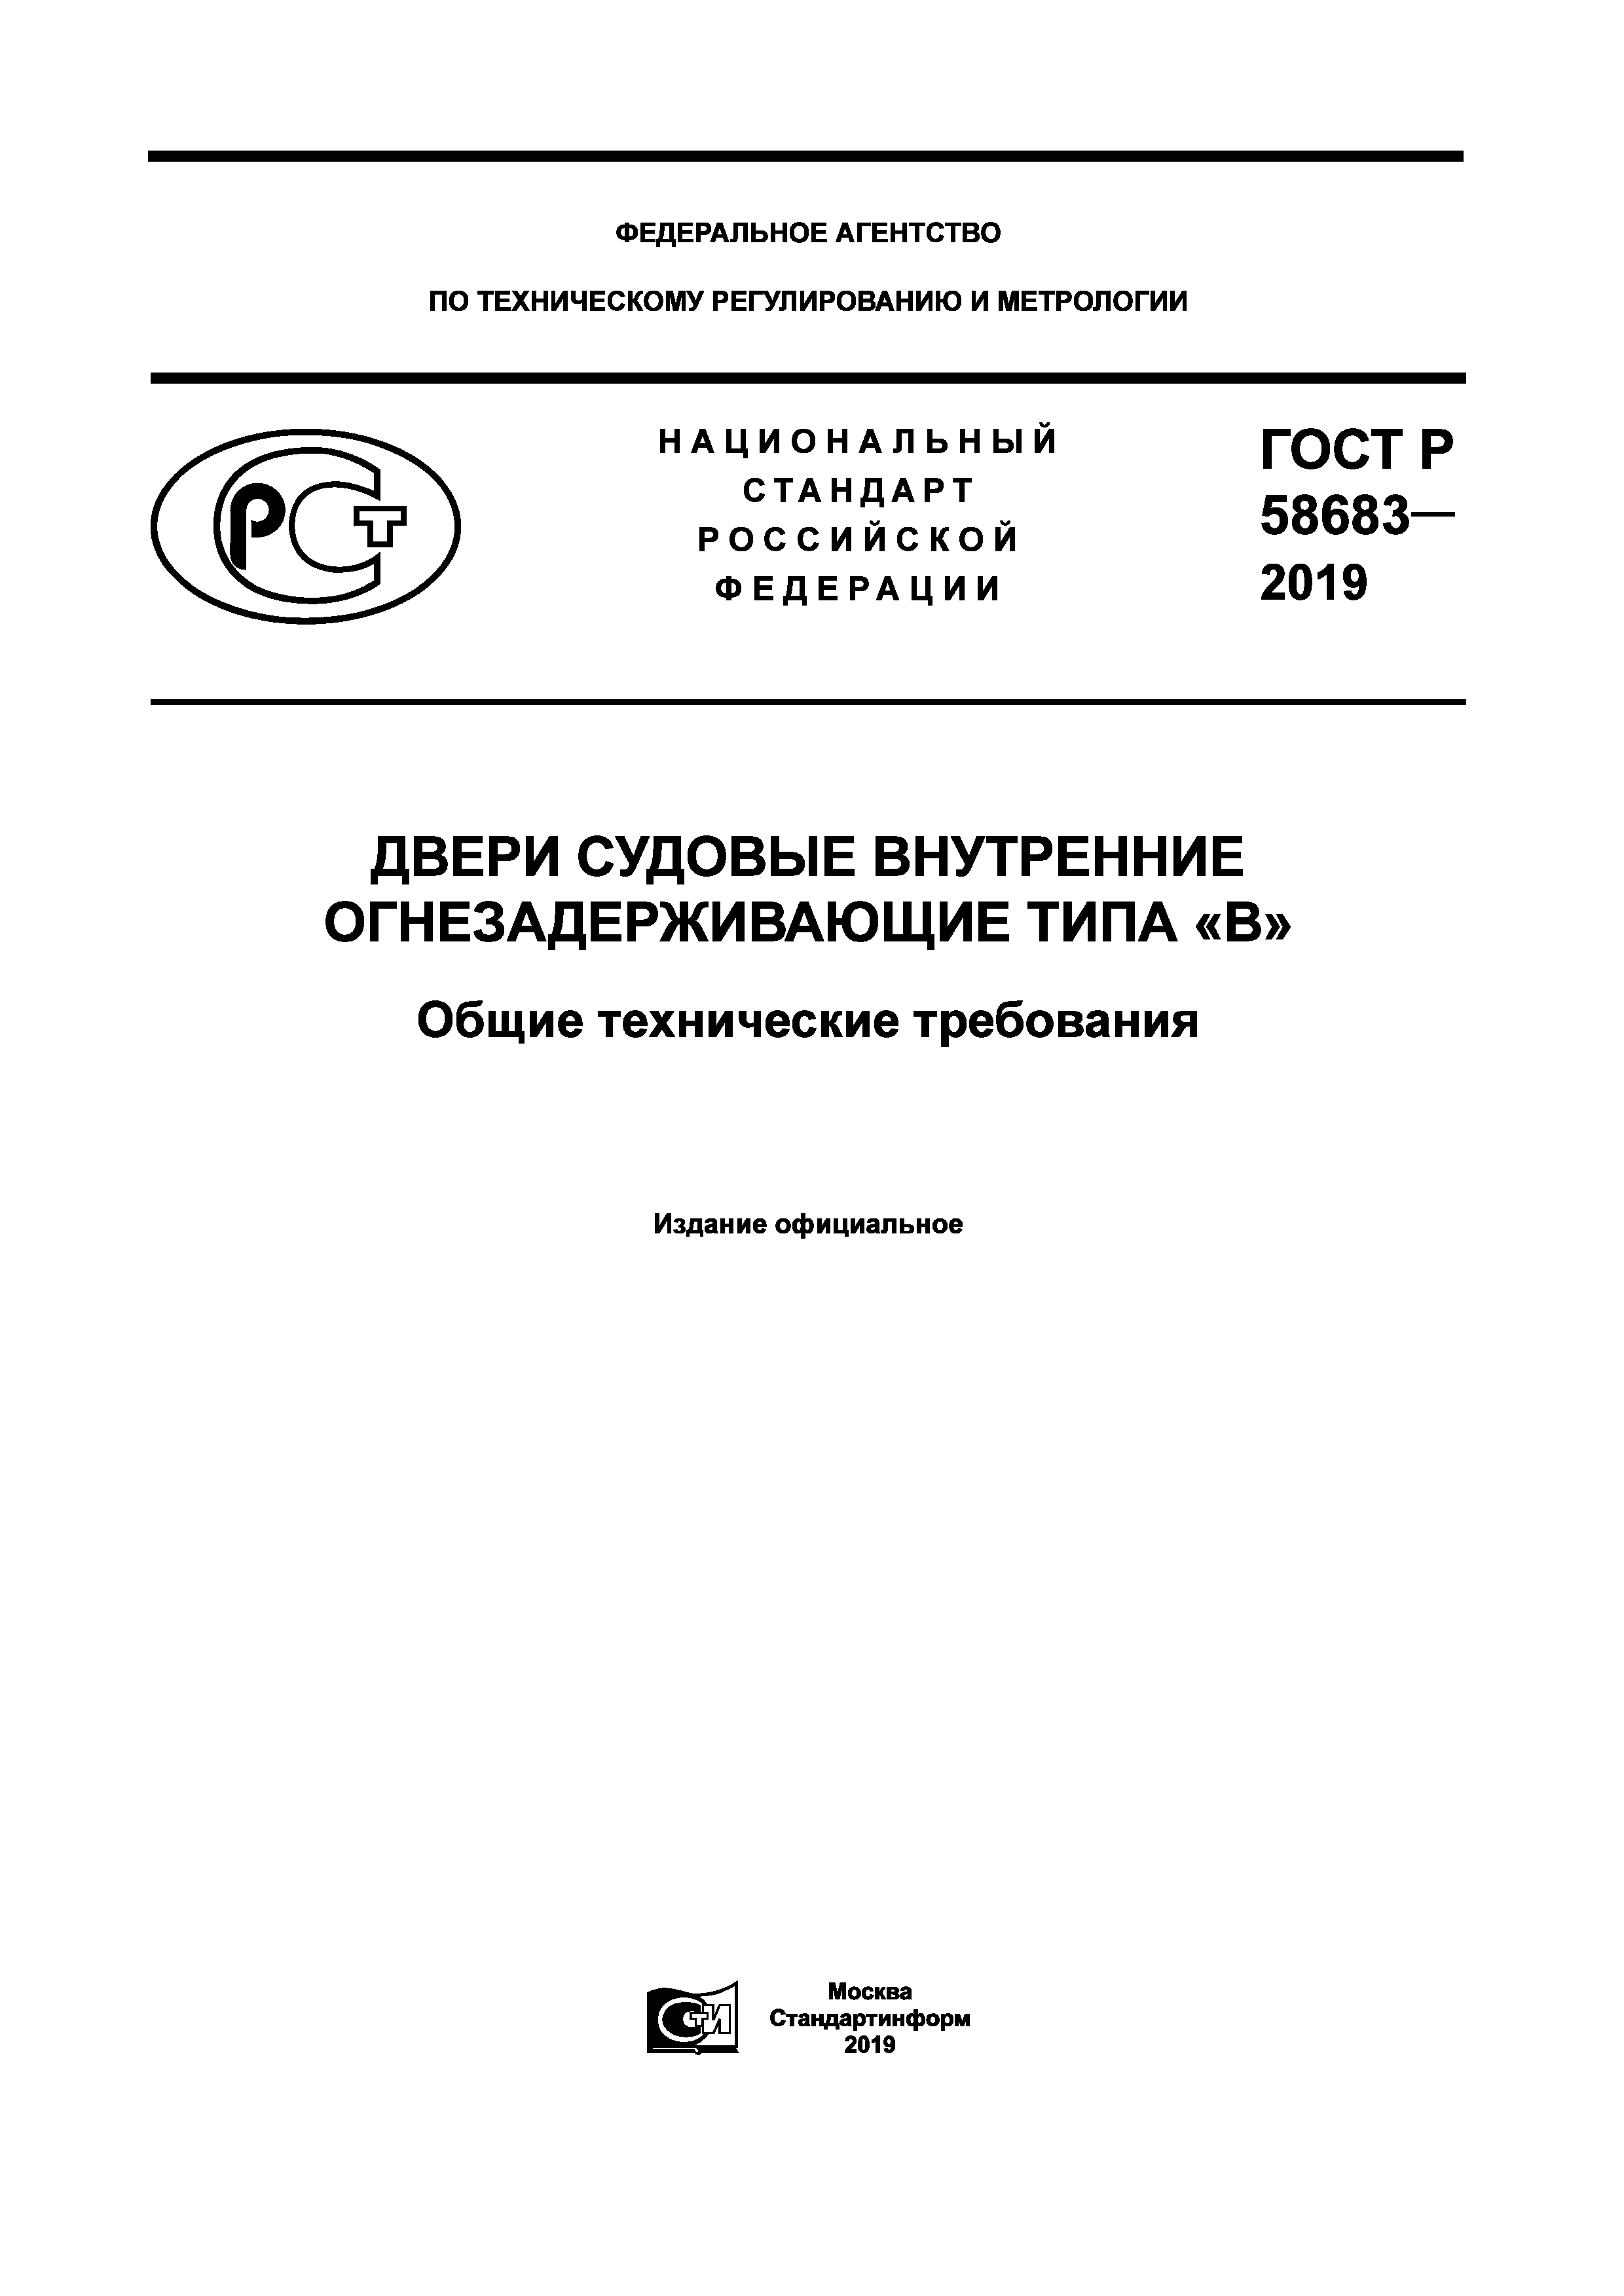 ГОСТ Р 58683-2019